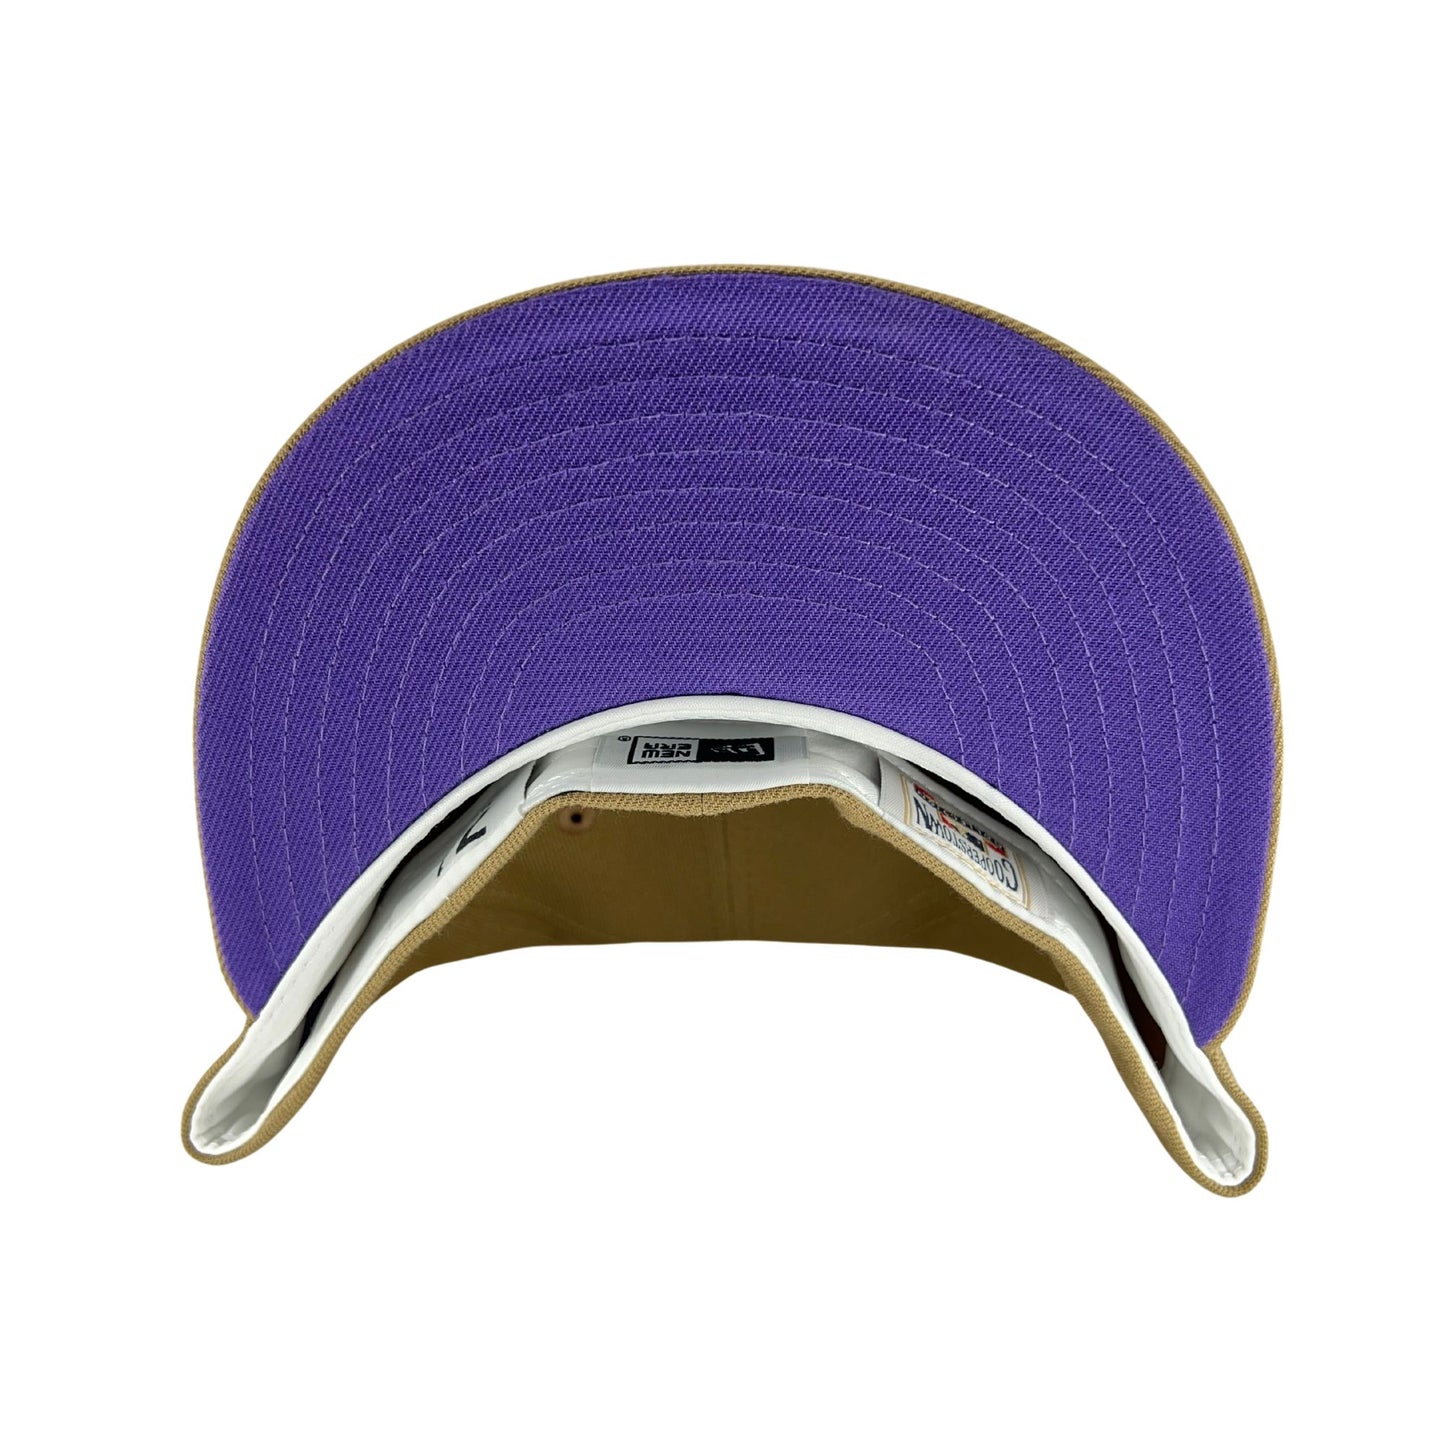 Chicago White Sox Khaki/Purple/Purple UV New Era 59FIFTY Fitted Hat